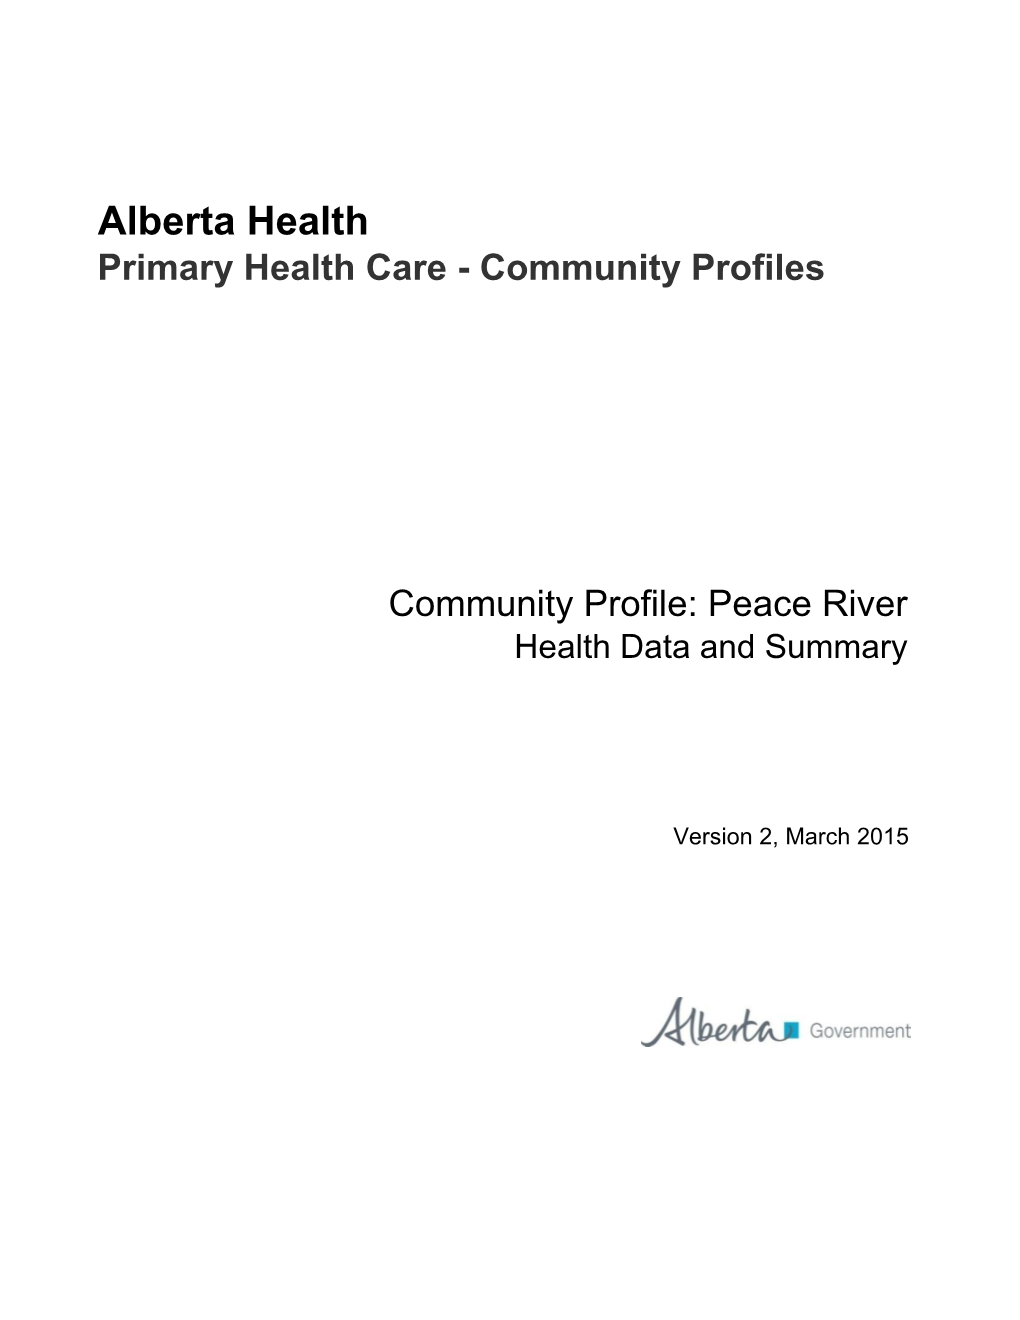 Peace River Health Data and Summary